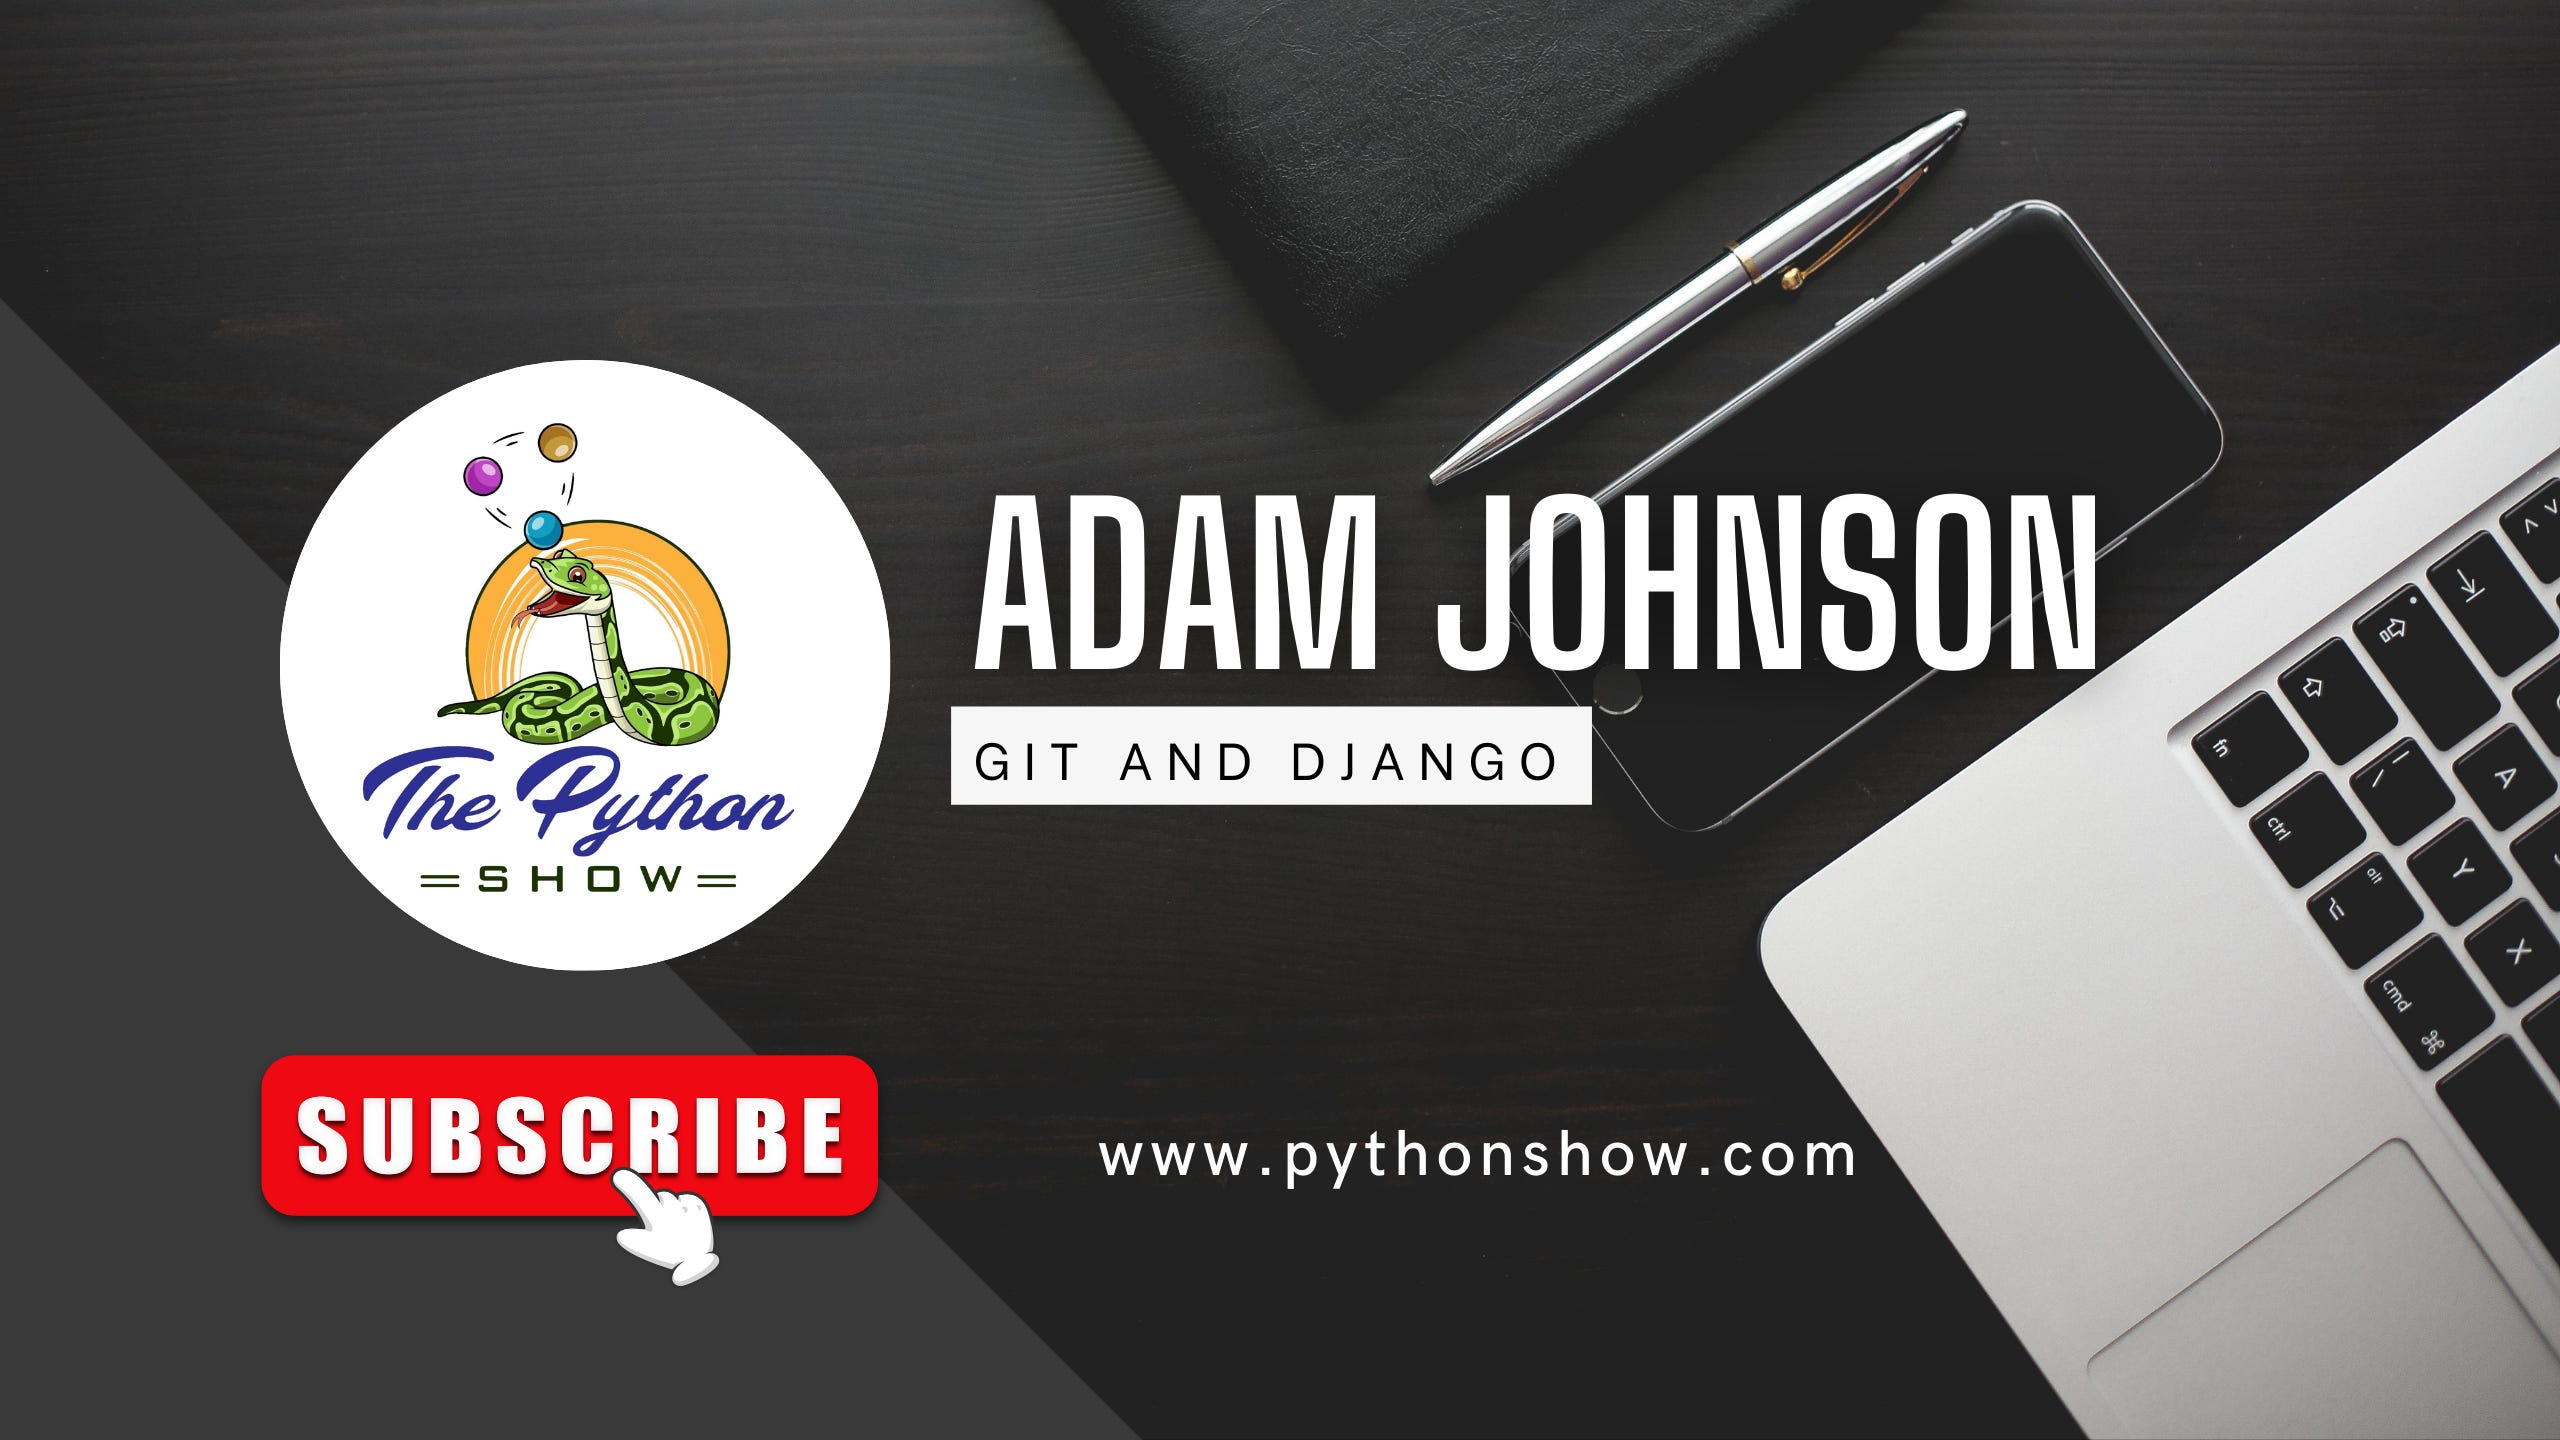 22 - Git and Django with Adam Johnson